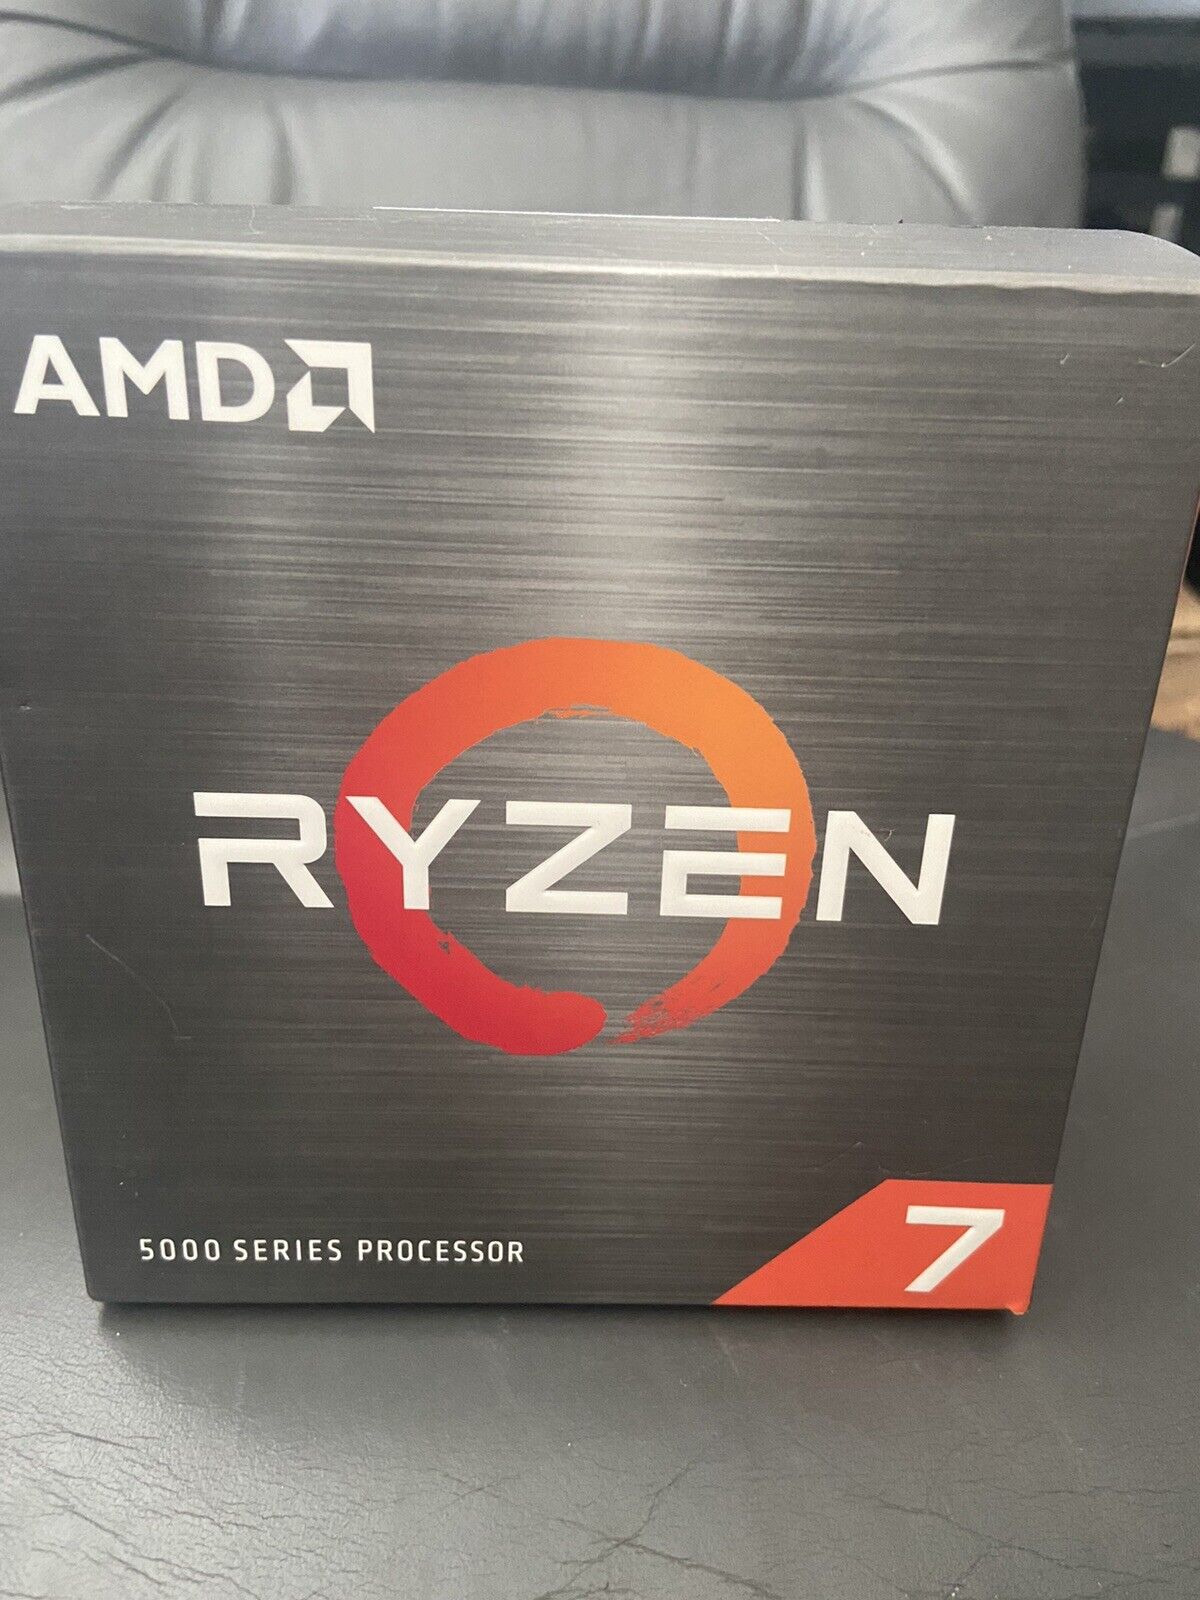 # Open Box - AMD Ryzen 7 5800X Desktop Processor (4.7GHz, 8 Cores, Socket AM4)